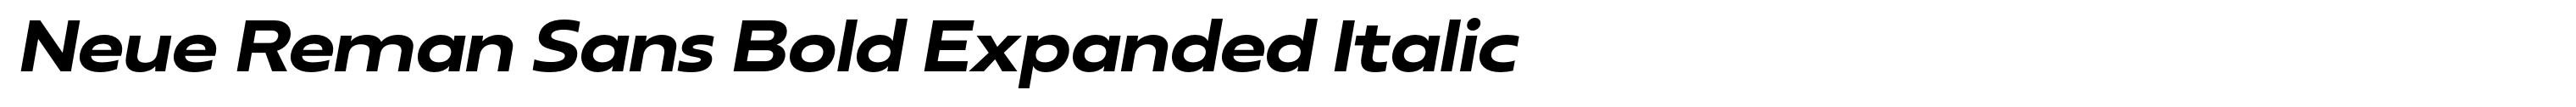 Neue Reman Sans Bold Expanded Italic